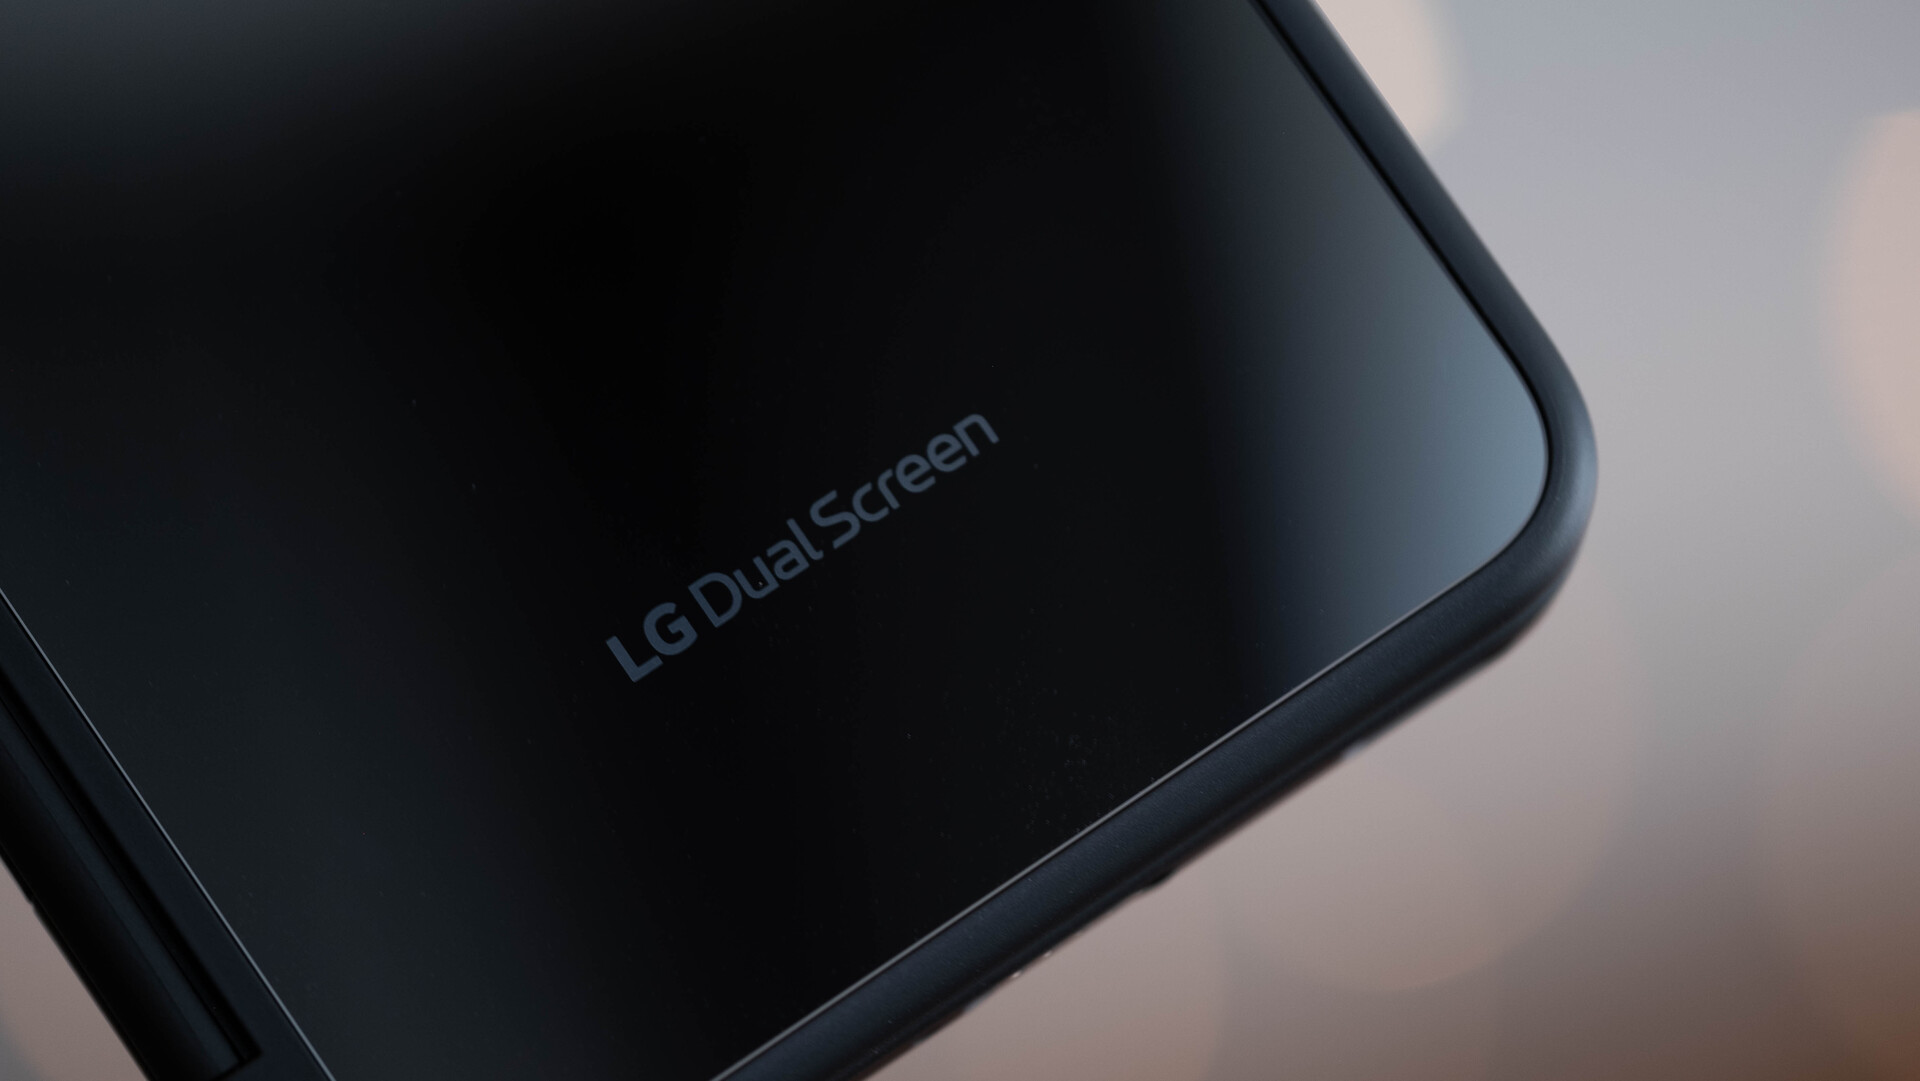 LG G8X ThinQ dual screen logo